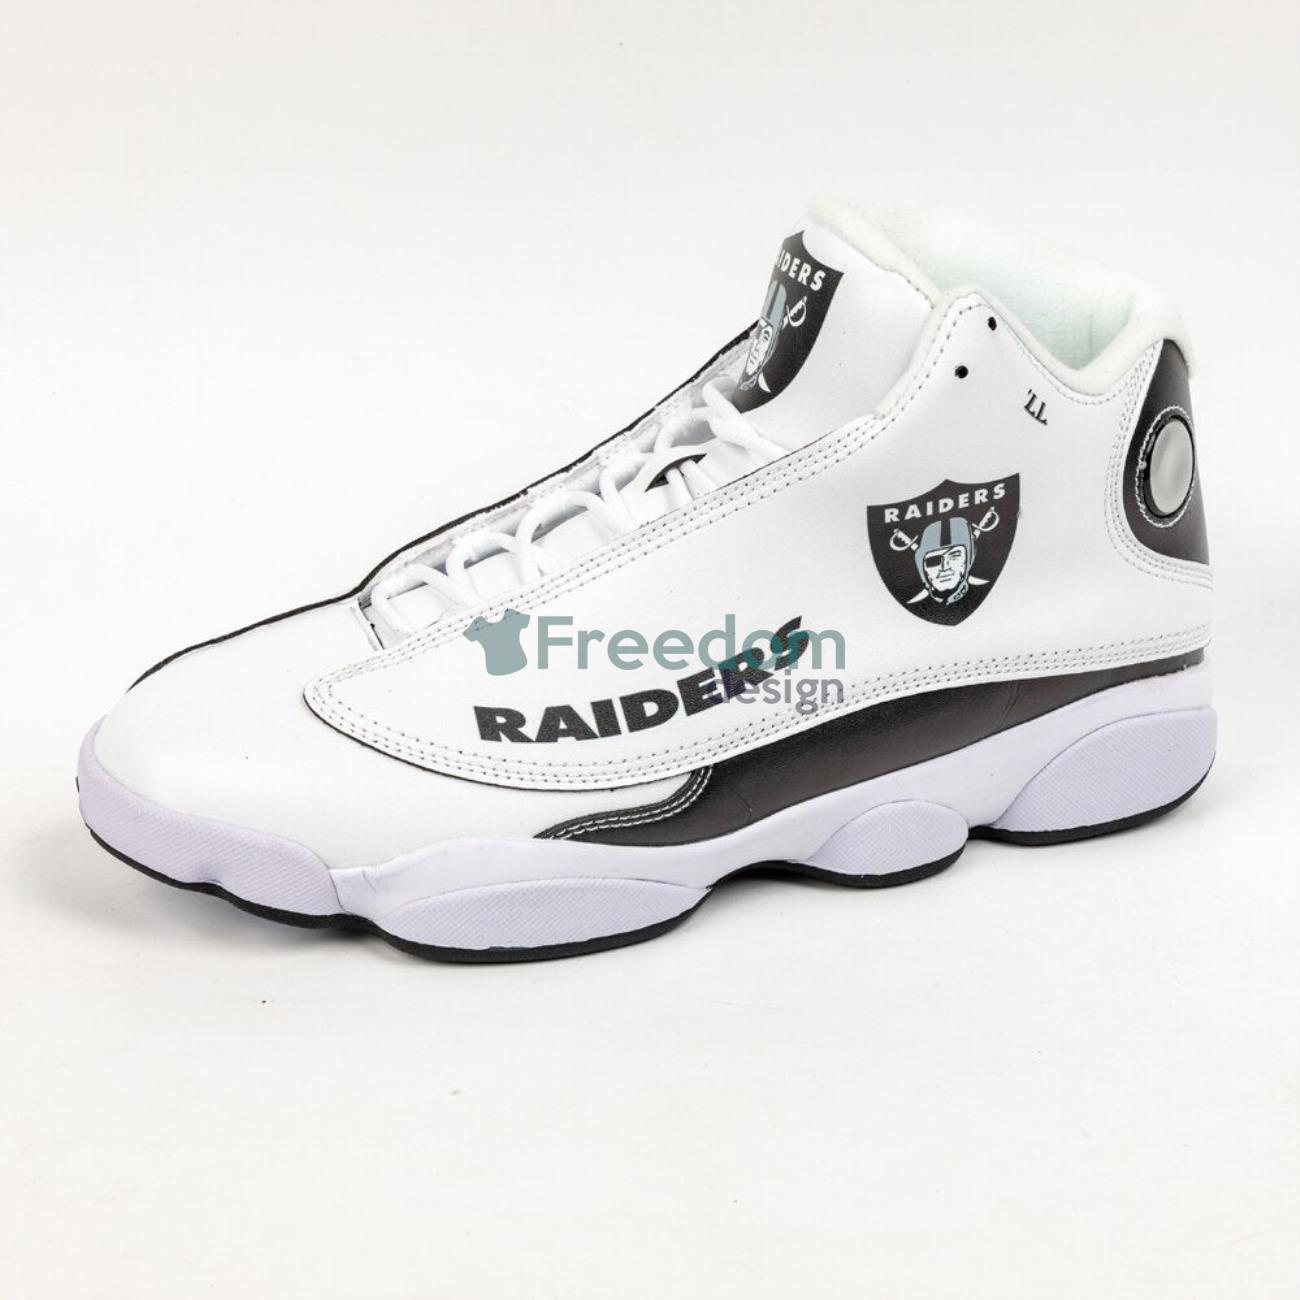 Las Vegas Raiders Team Custom Name White Air Jordan 13 Shoes For Fans